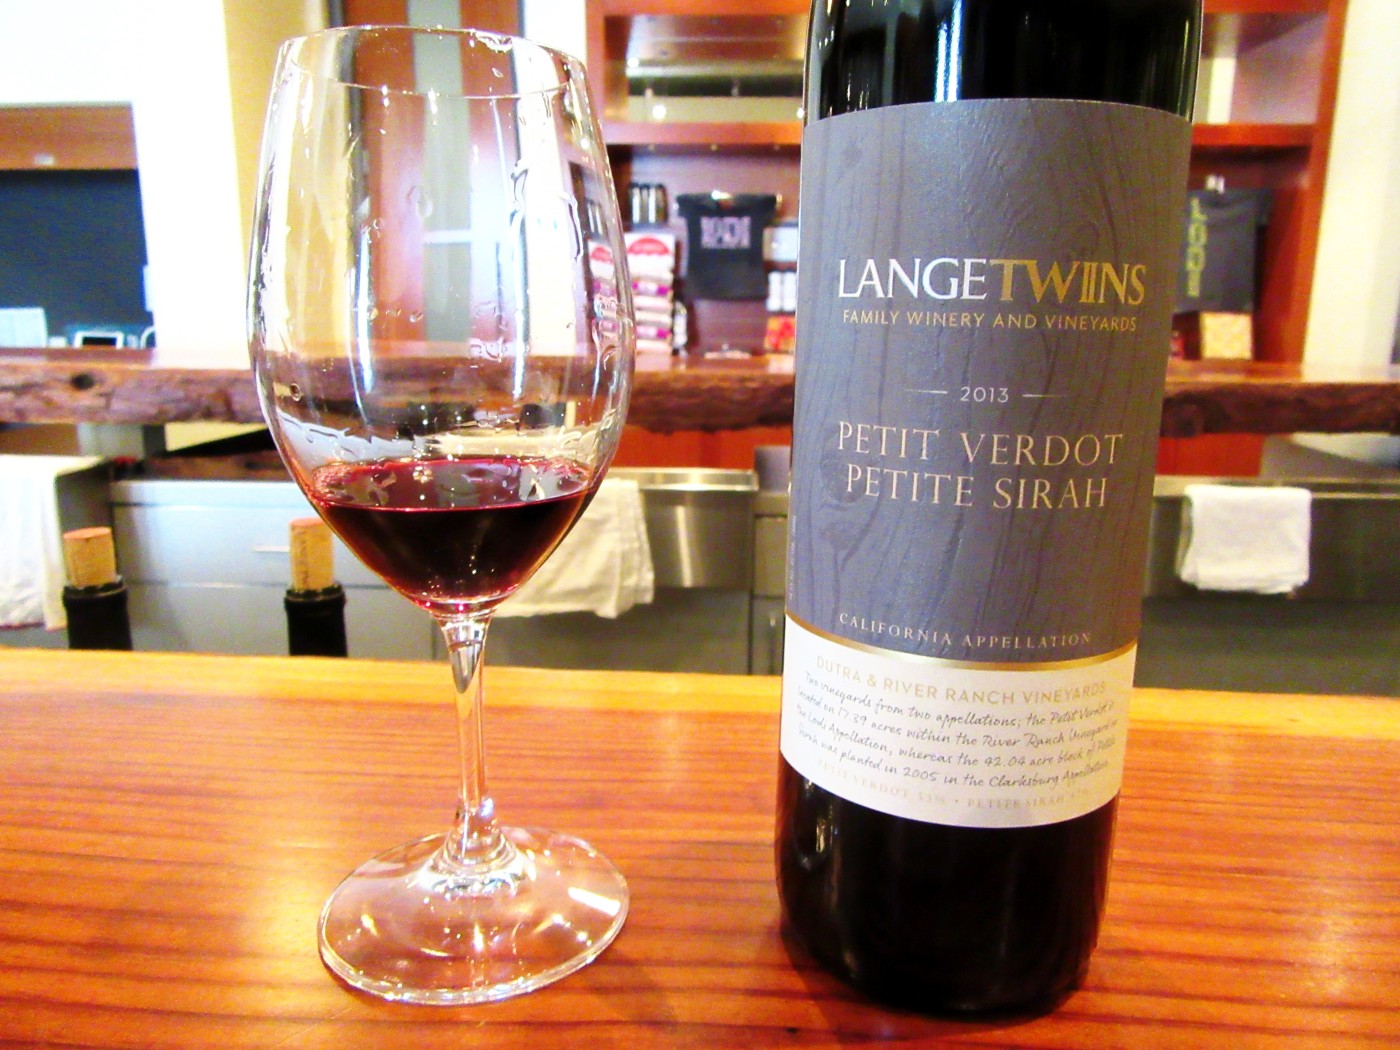 LangeTwins Family Winery and Vineyards, Petit Verdot Petite Sirah 2013, Dutra & River Ranch Vineyards, California, Wine Casual